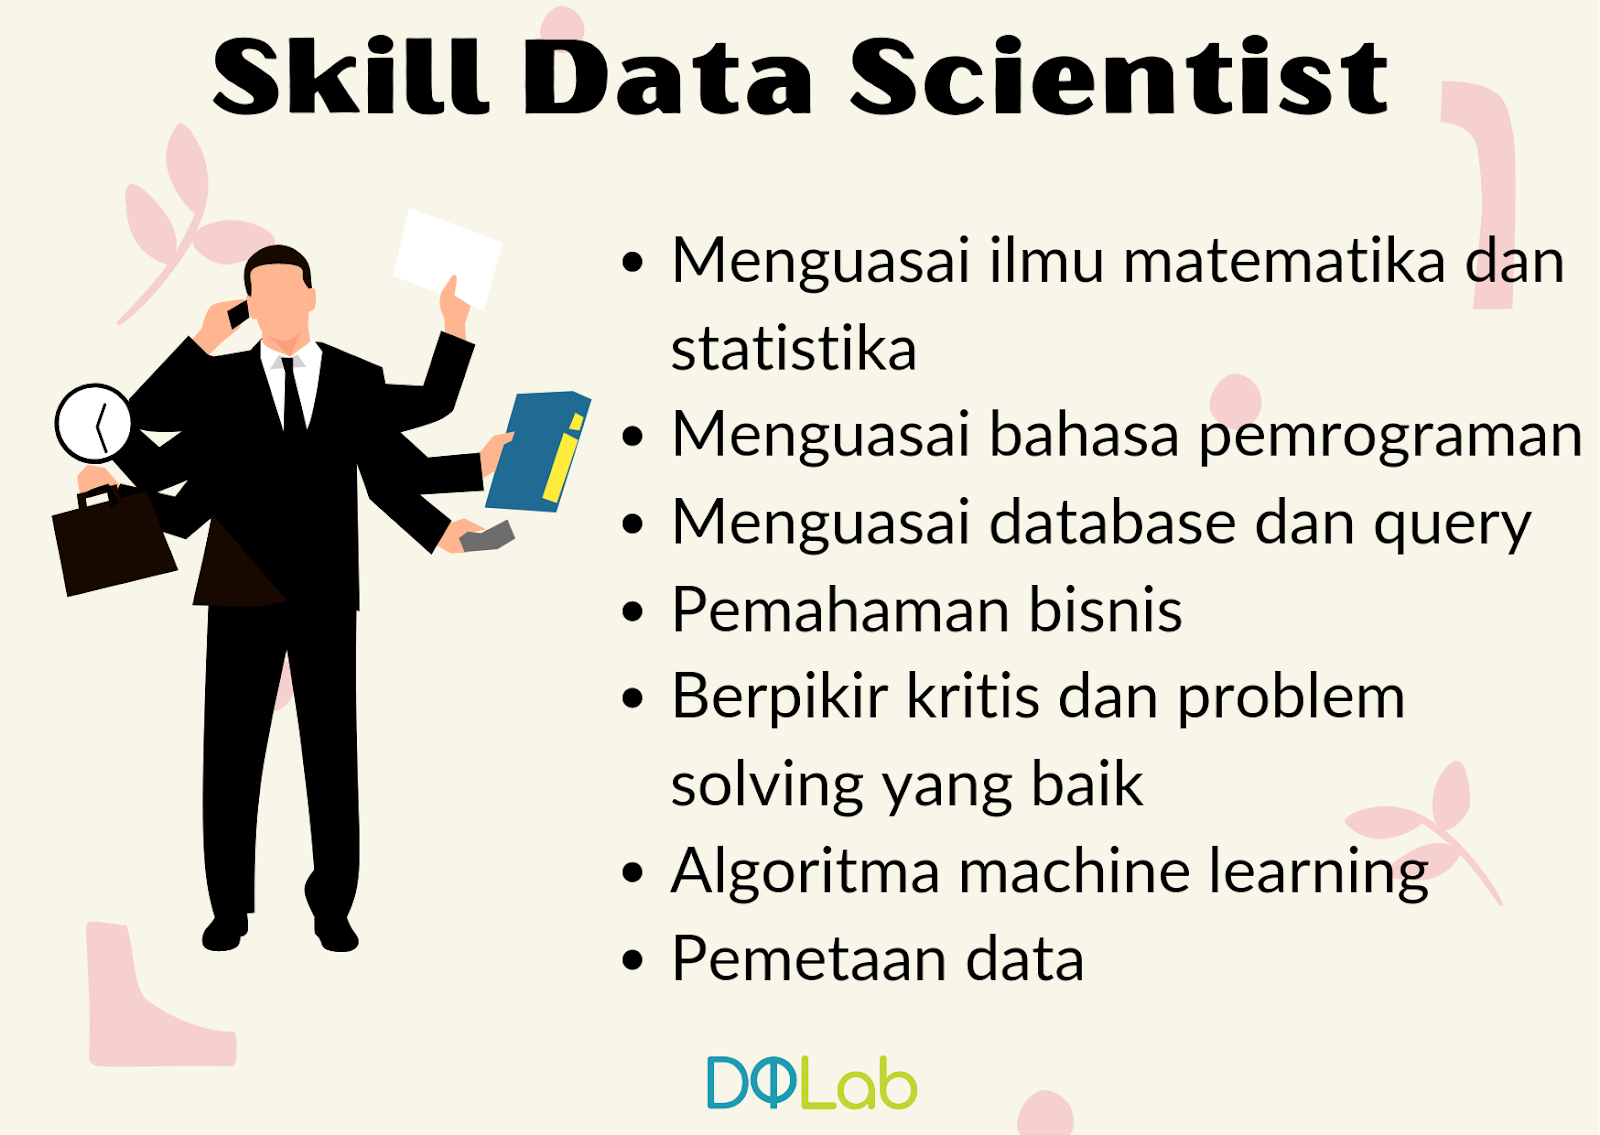 Data Scientist